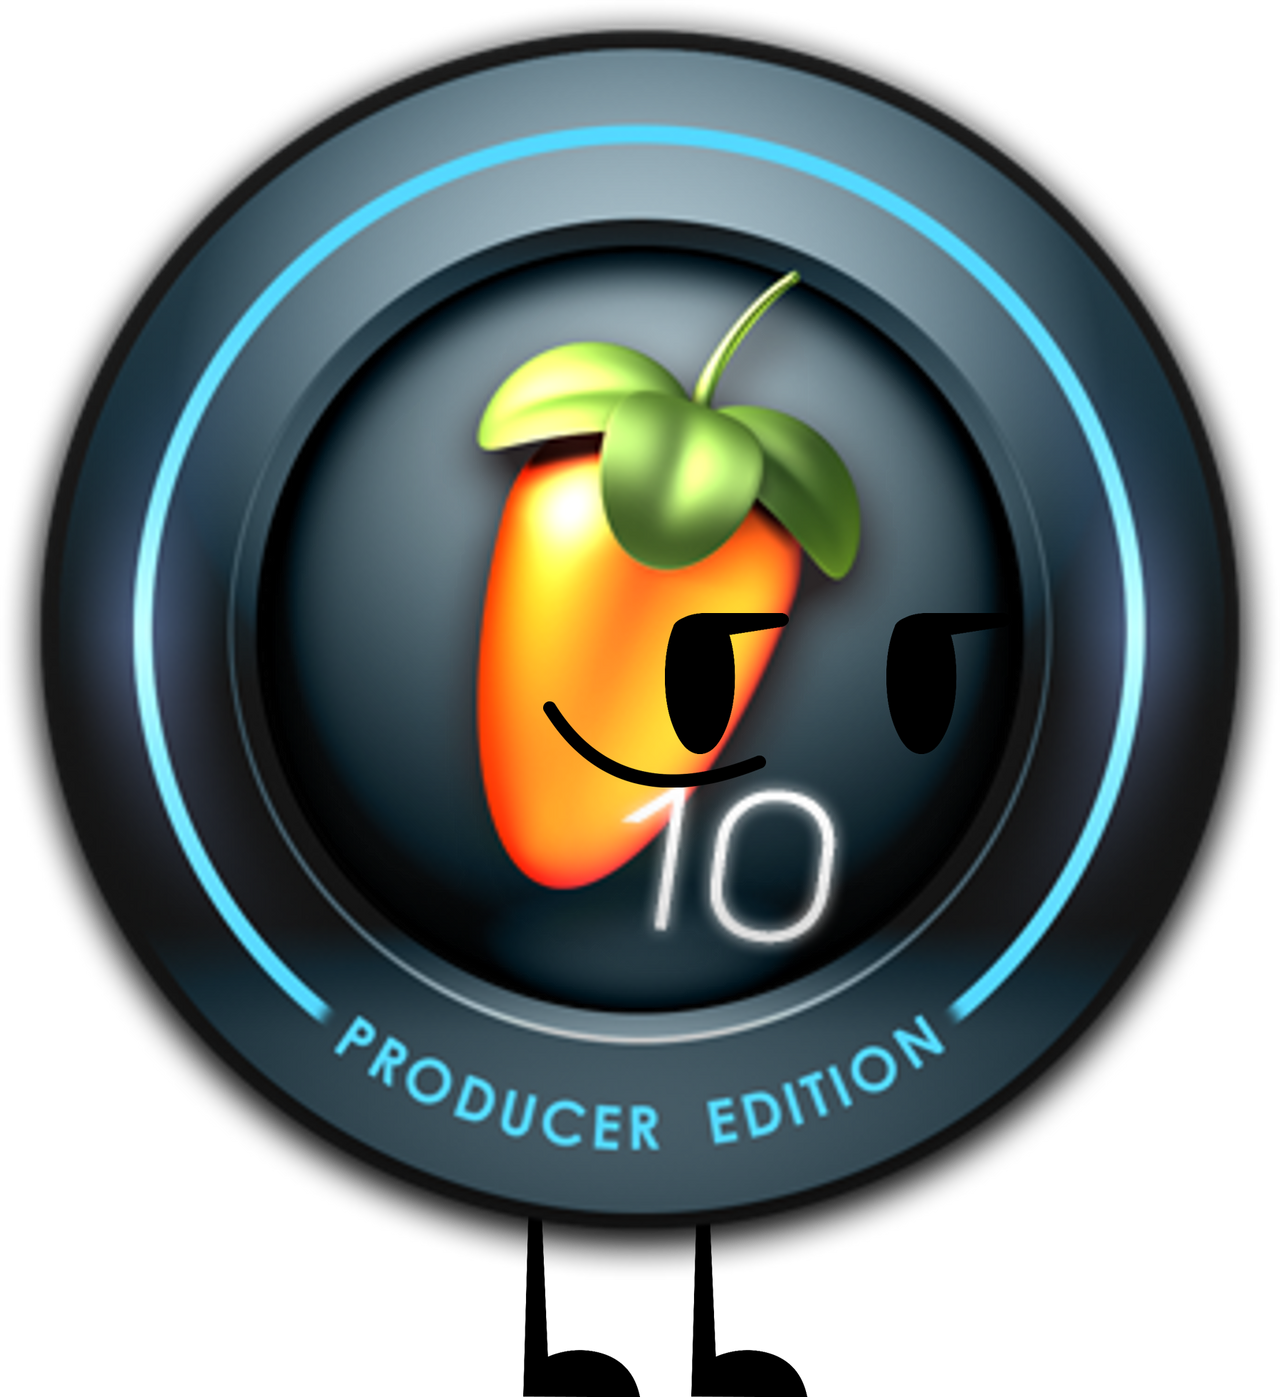 FL Studio 10 Logo by CarterPSpartanProds on DeviantArt